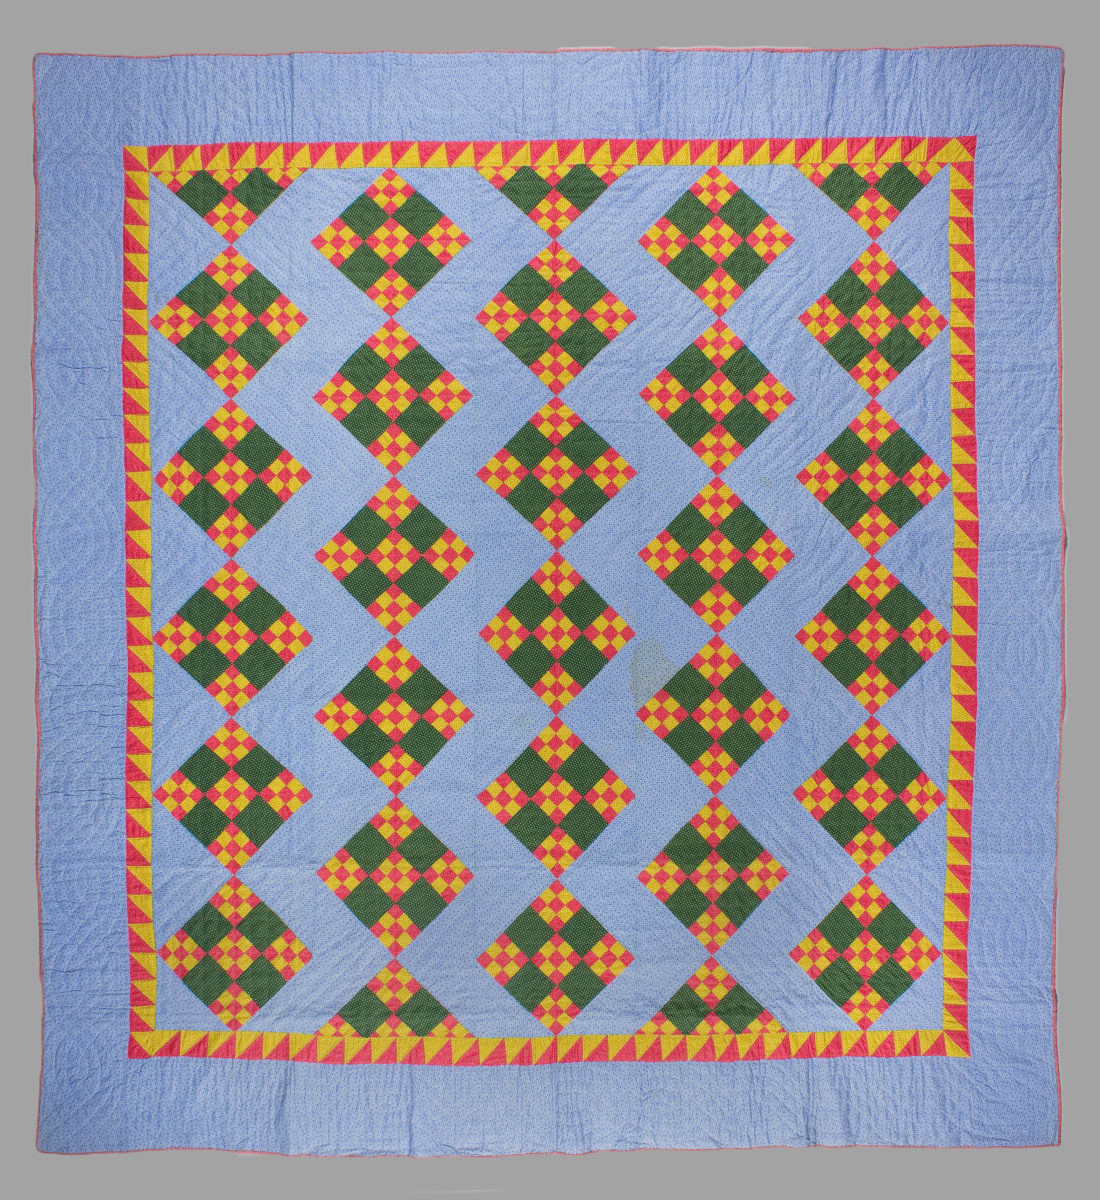 Nine Patch Quilt (variation) by Unknown Artist 